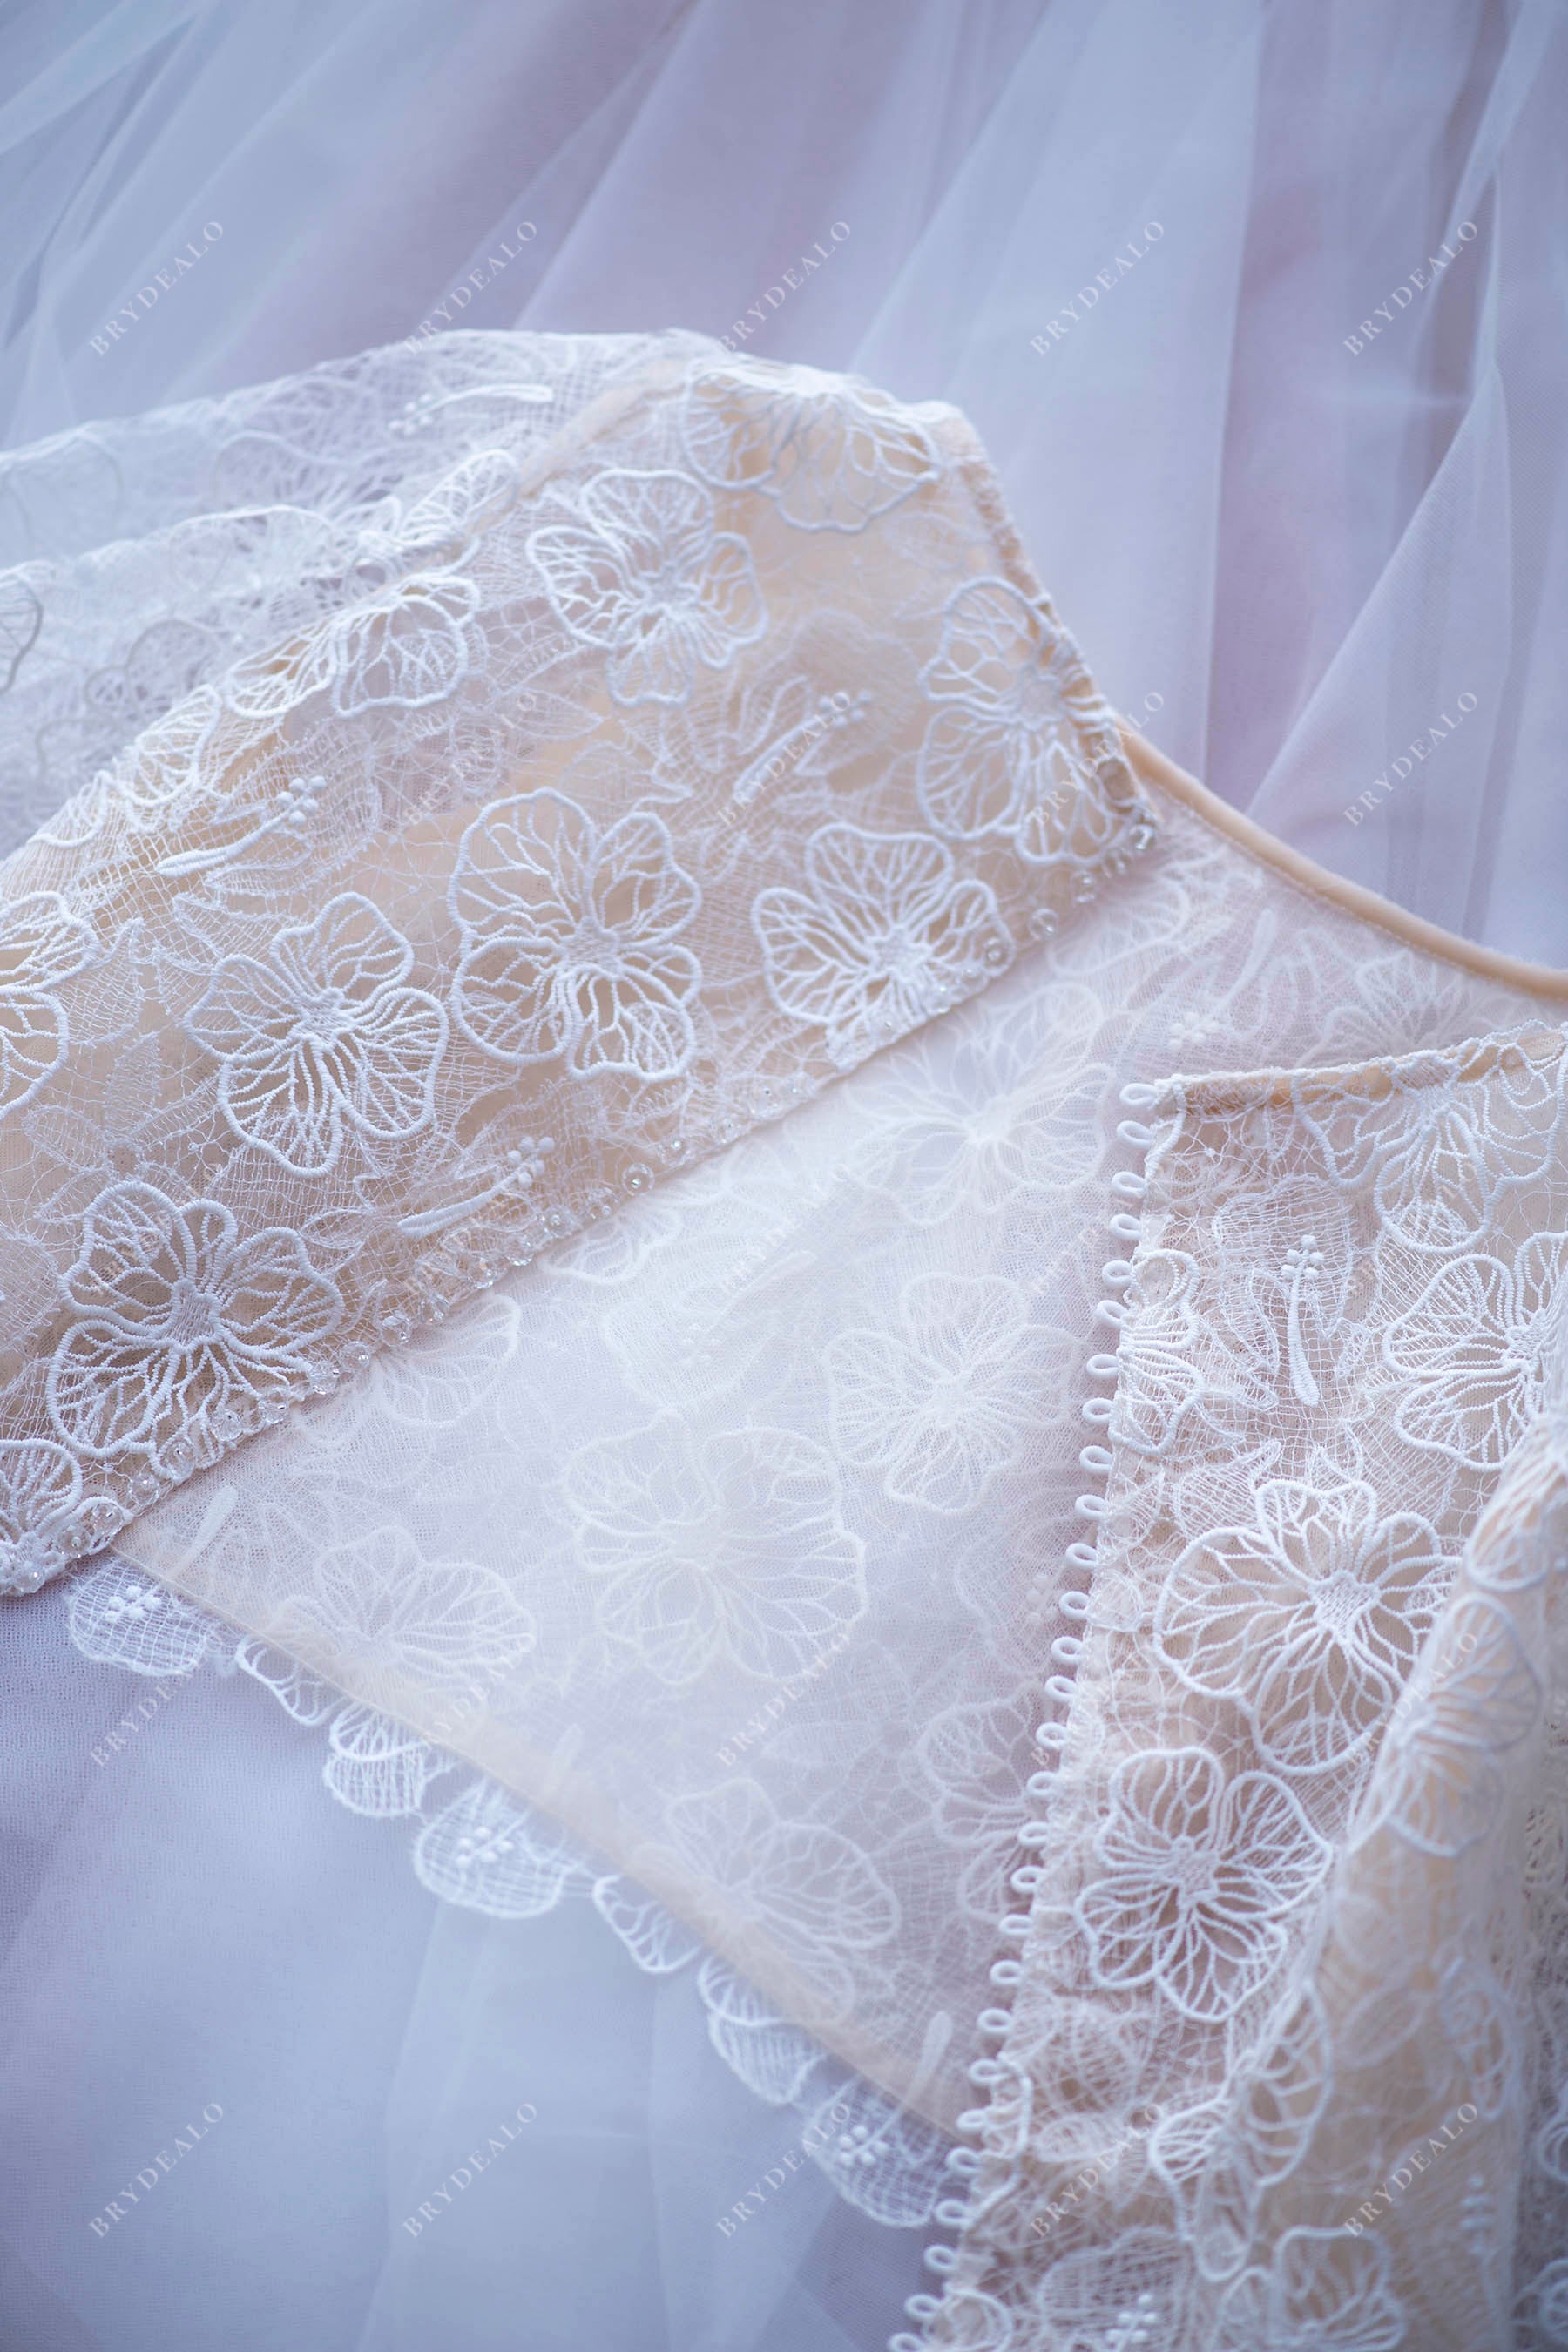 designed floral lace sheer wedding crop top